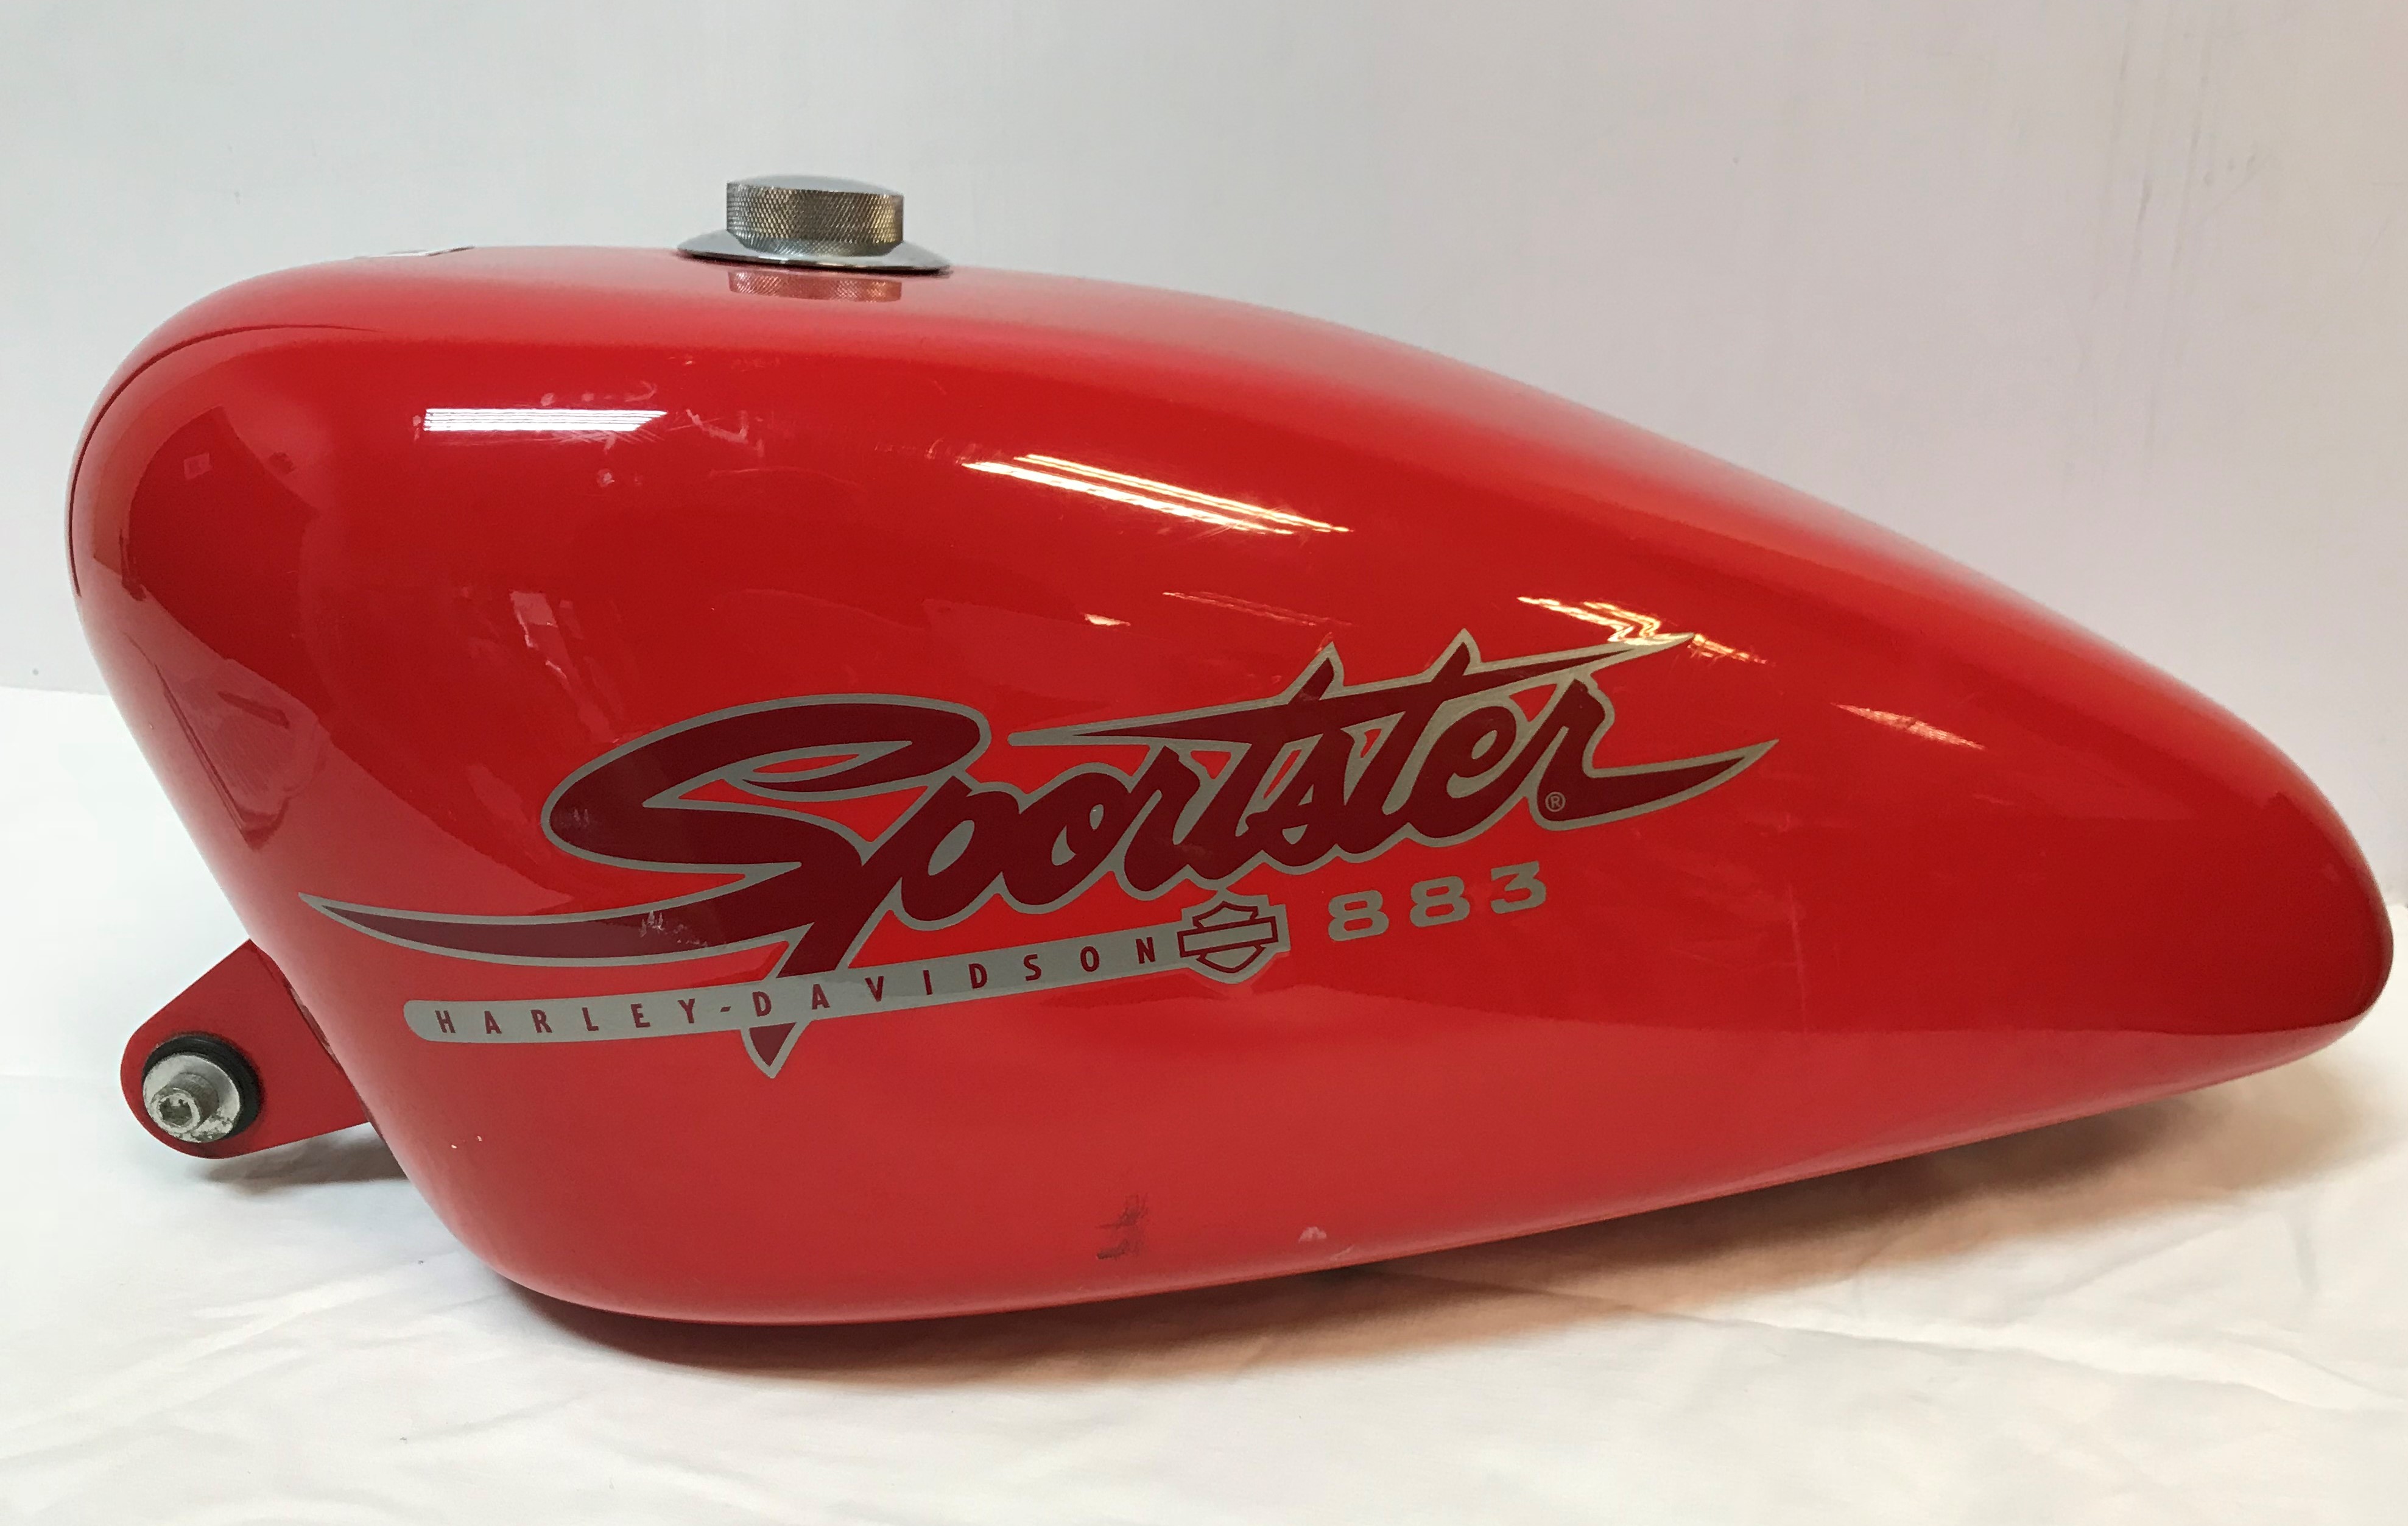 A Harley Davidson Sportster 883 petrol tank, red 51 cm long x approx. 25.